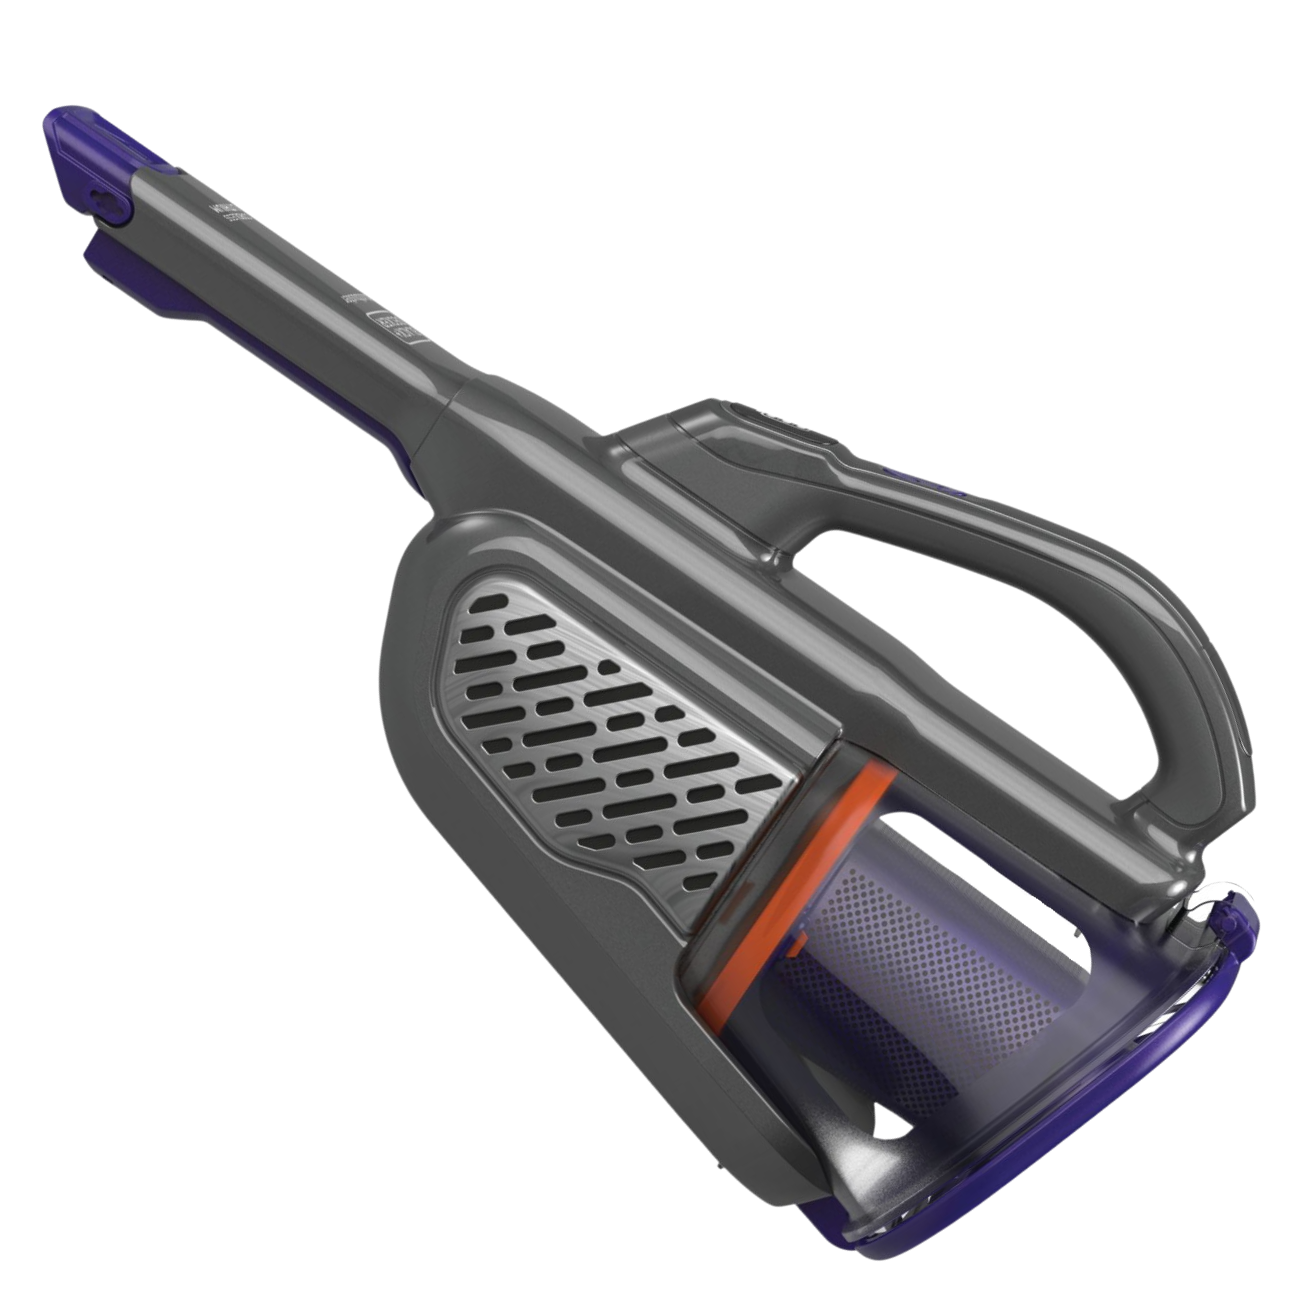 BLACK+DECKER dustbuster AdvancedClean+ 20-Volt Cordless 2.9-Cup Handheld  Vacuum Pet HHVK515JP07 - The Home Depot